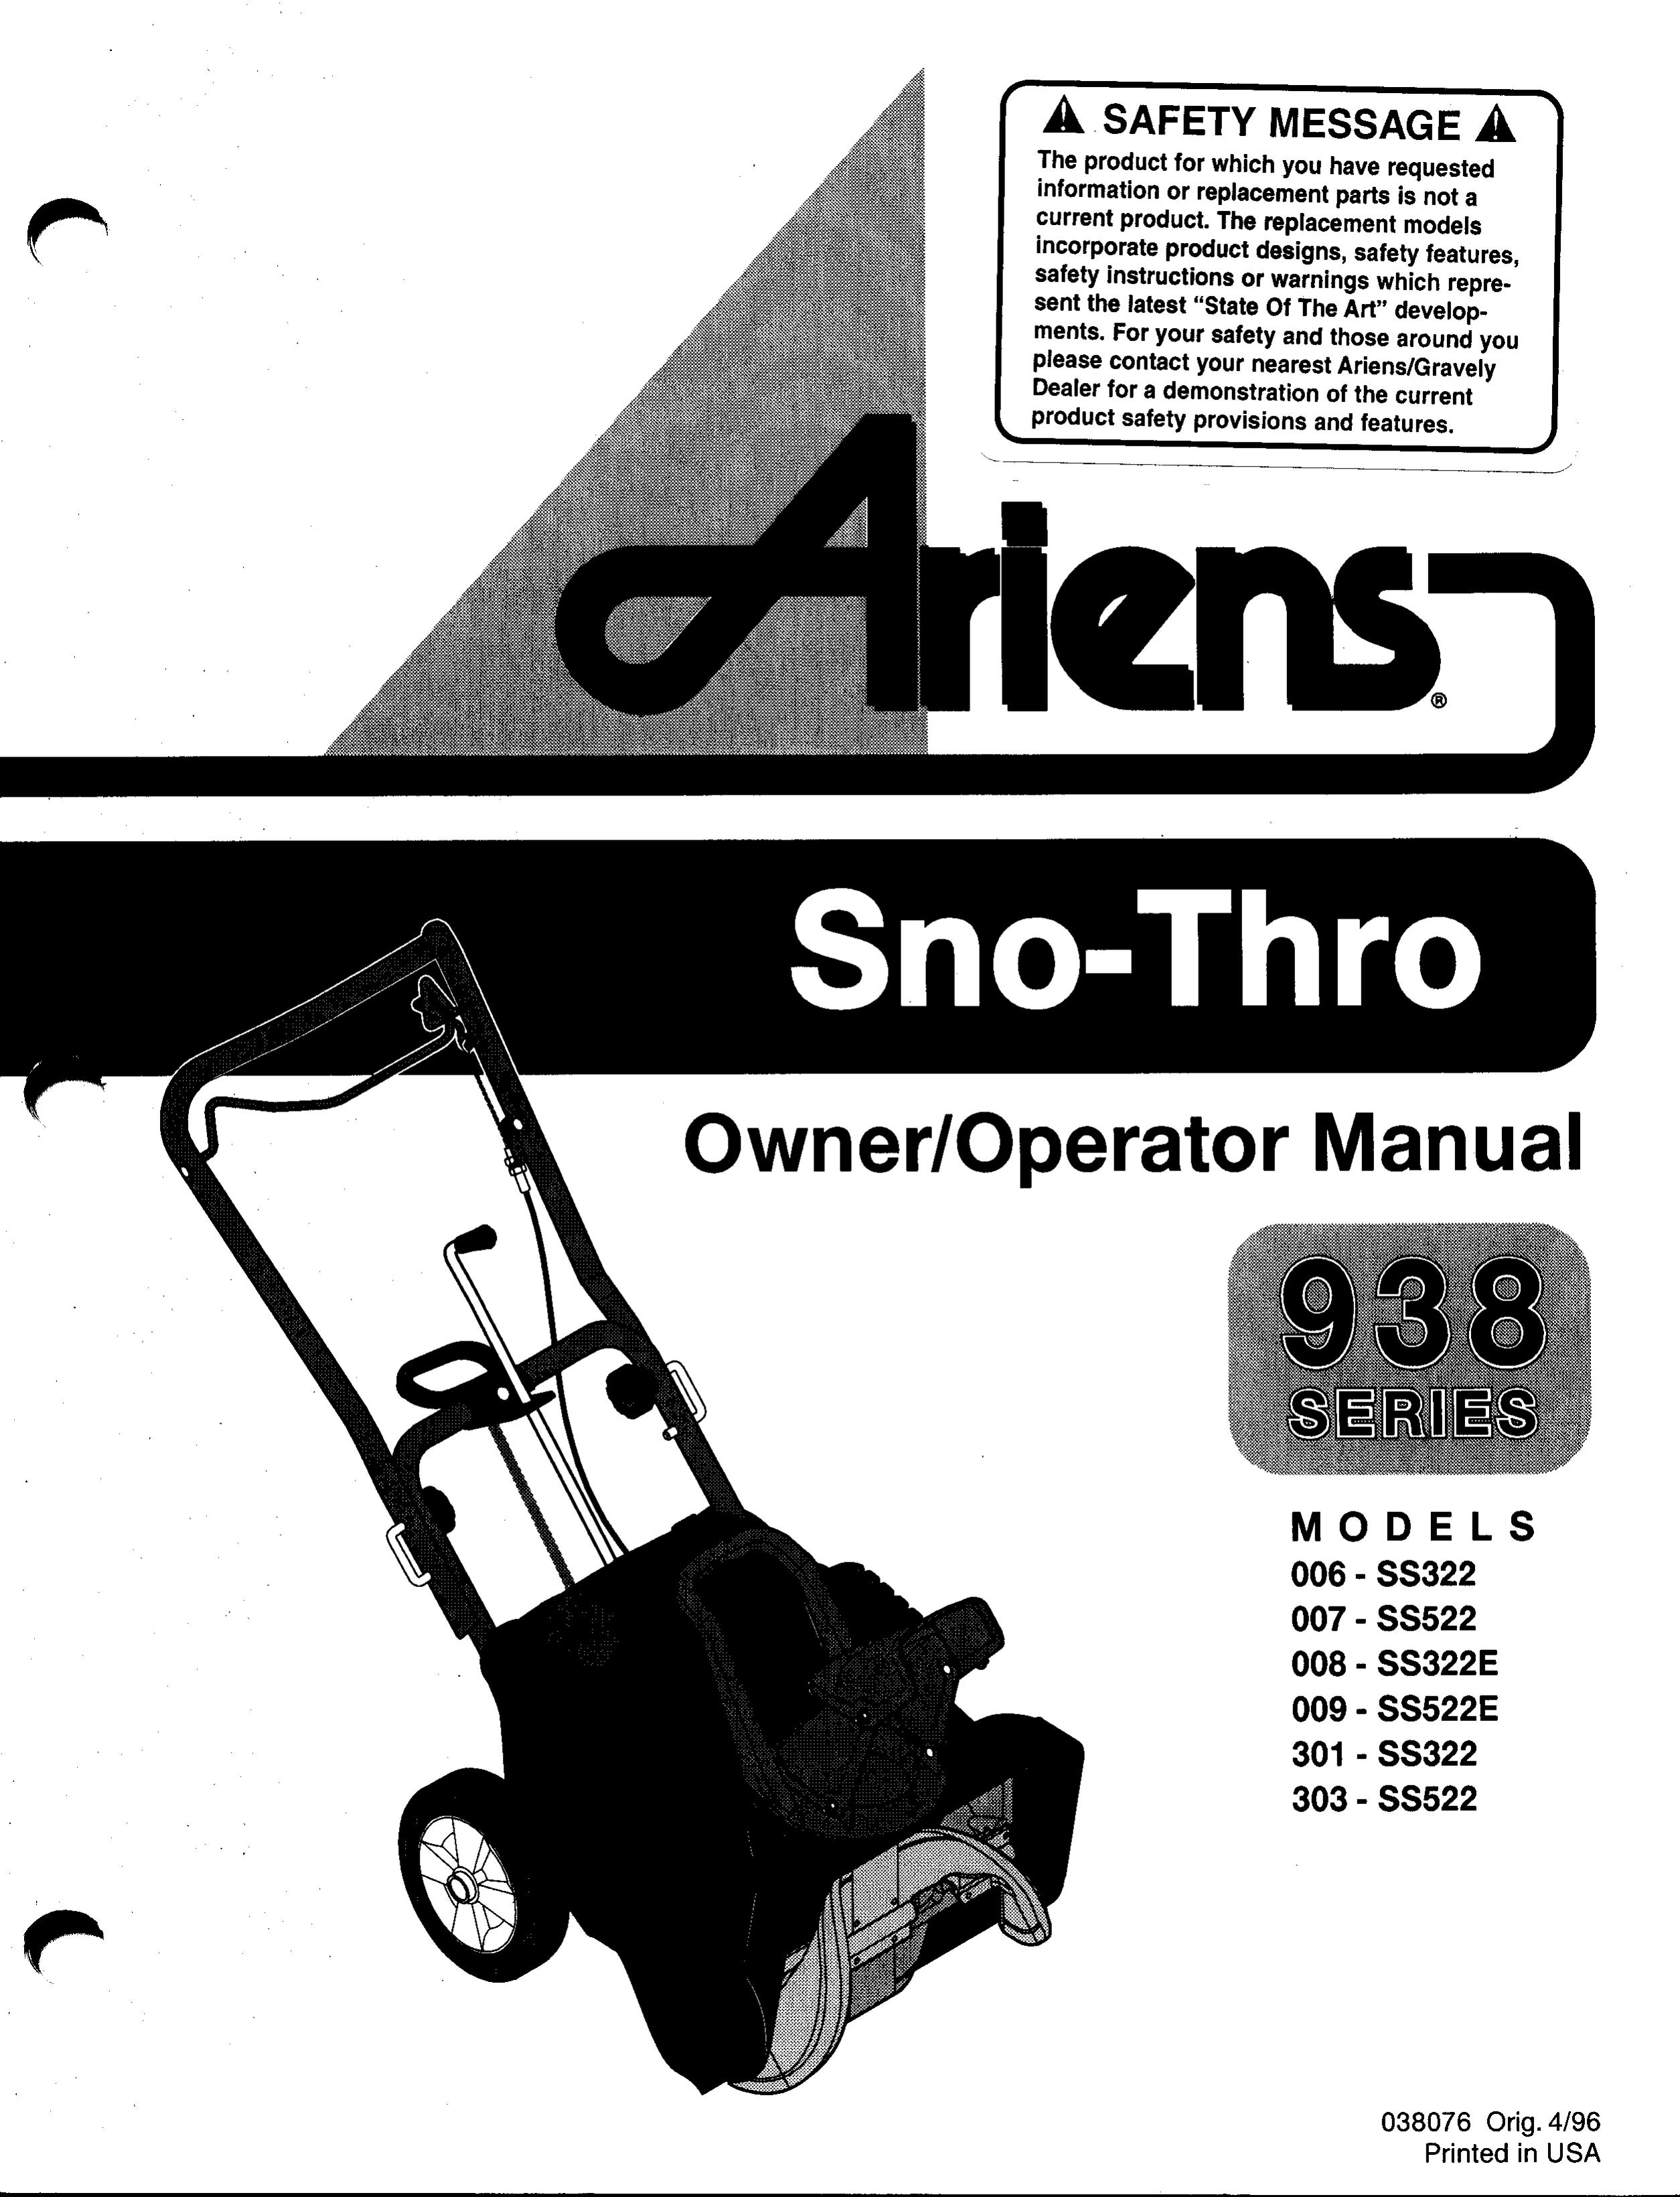 Ariens 008-SS322E Snow Blower User Manual